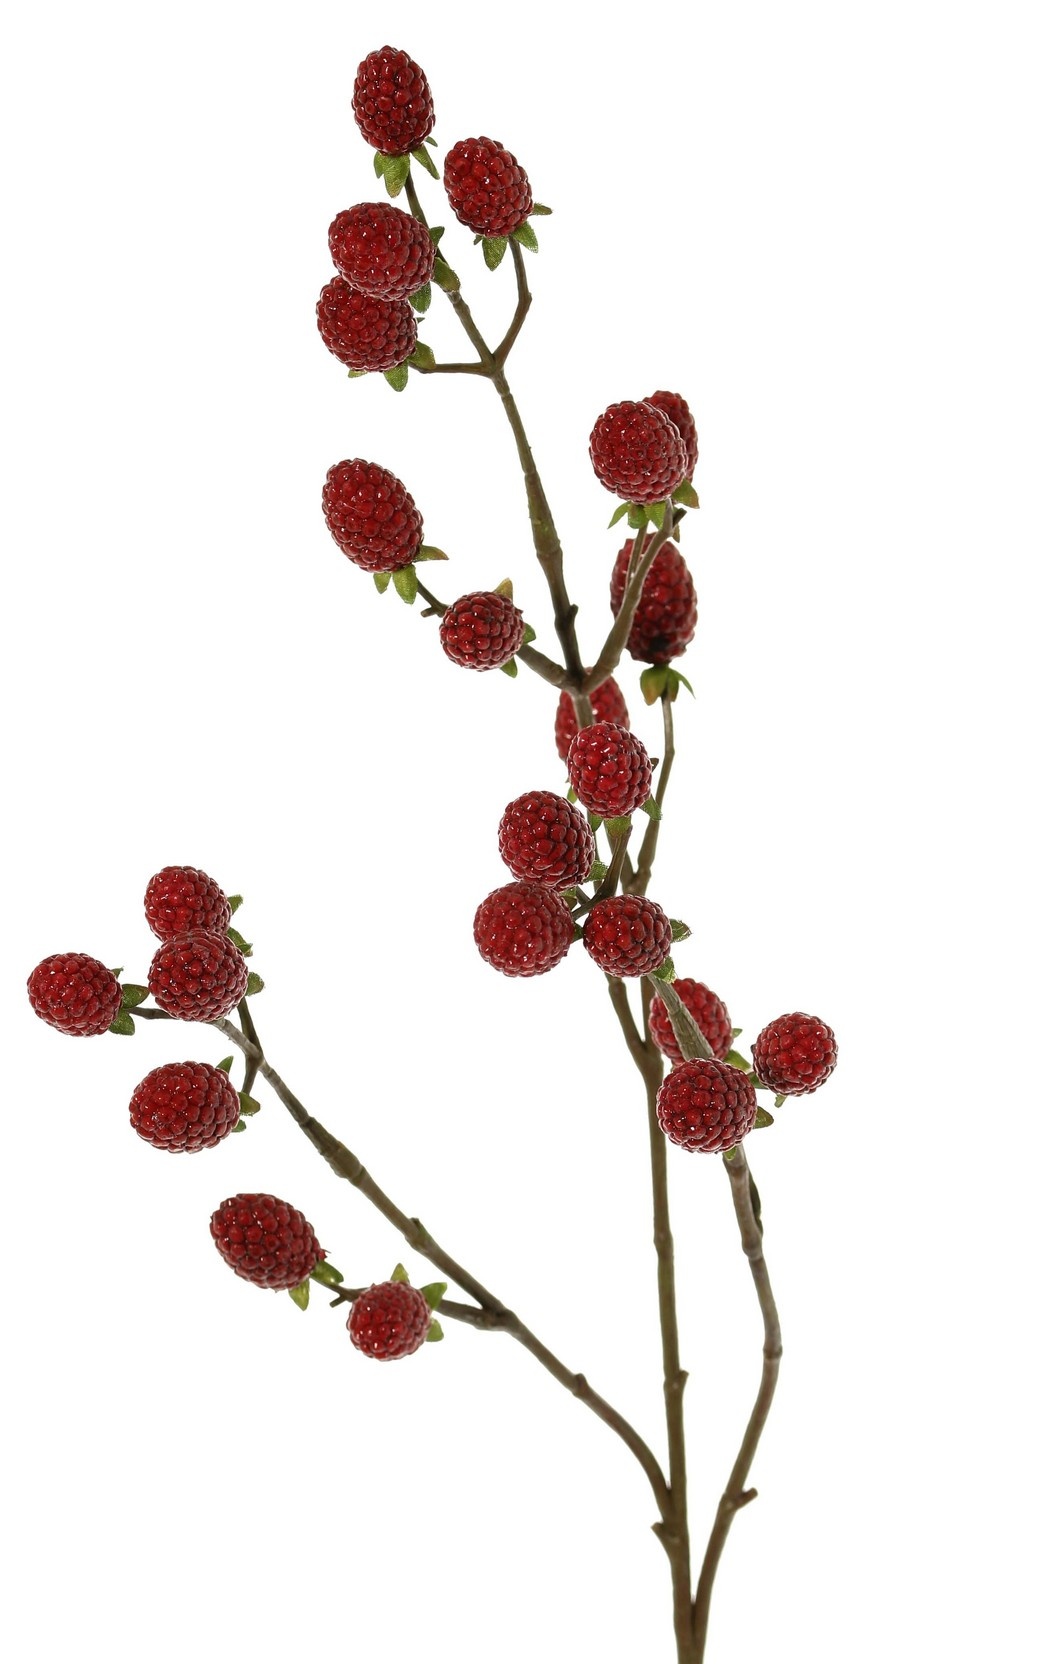 Blackberry branch (Rubus) 'Fruity Art' with 23 blackberries (11 L/ 12 M), 89 cm